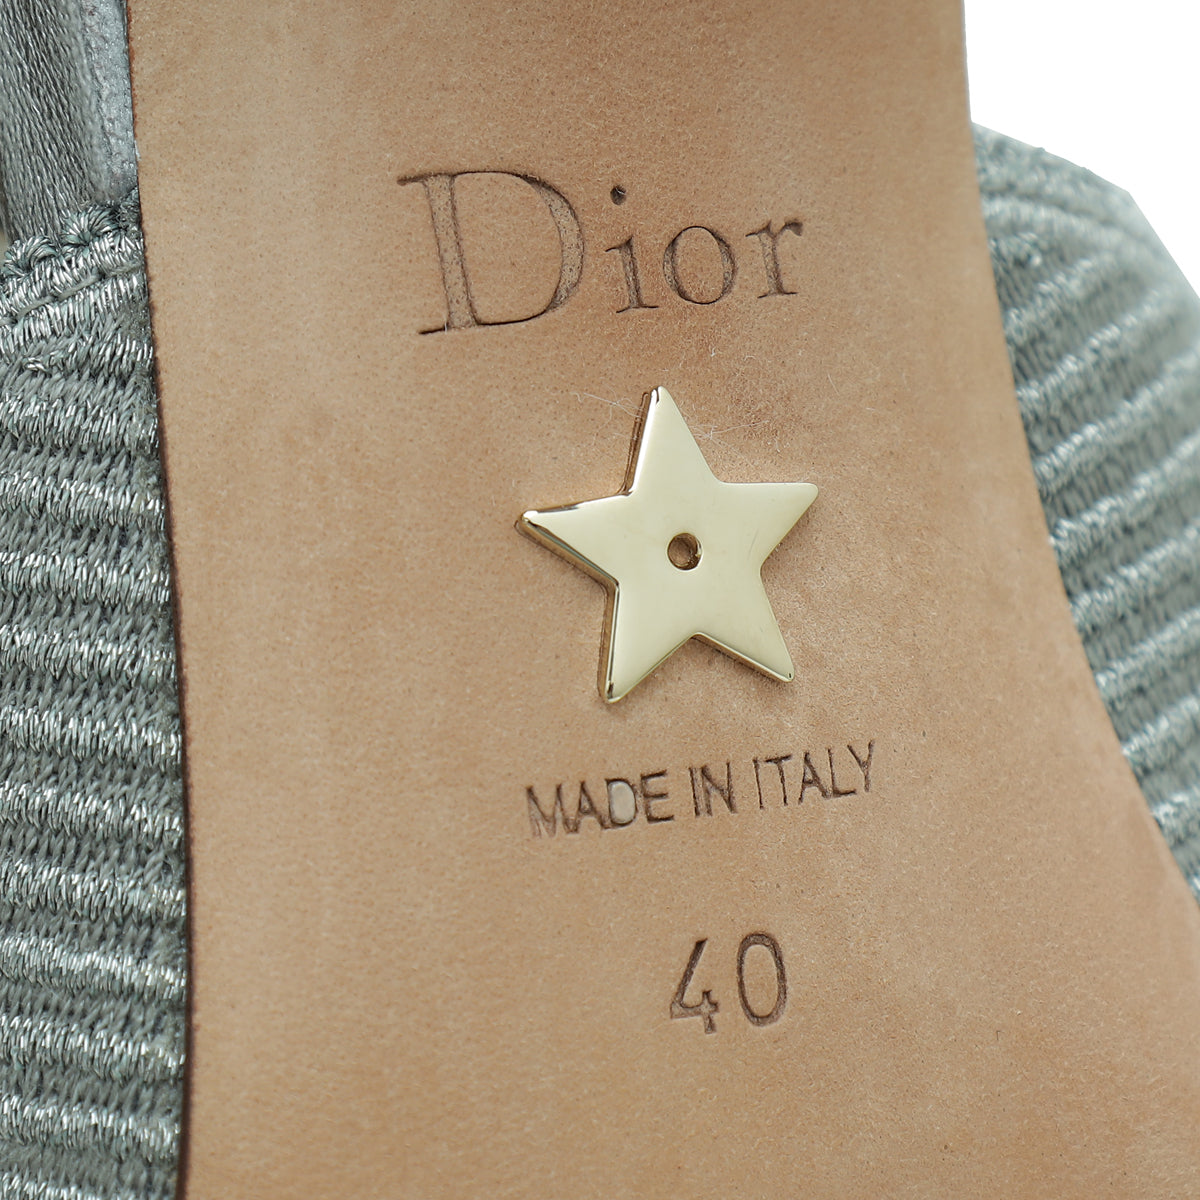 Christian Dior Metallic Silver J'Adior Slingback Pumps 40